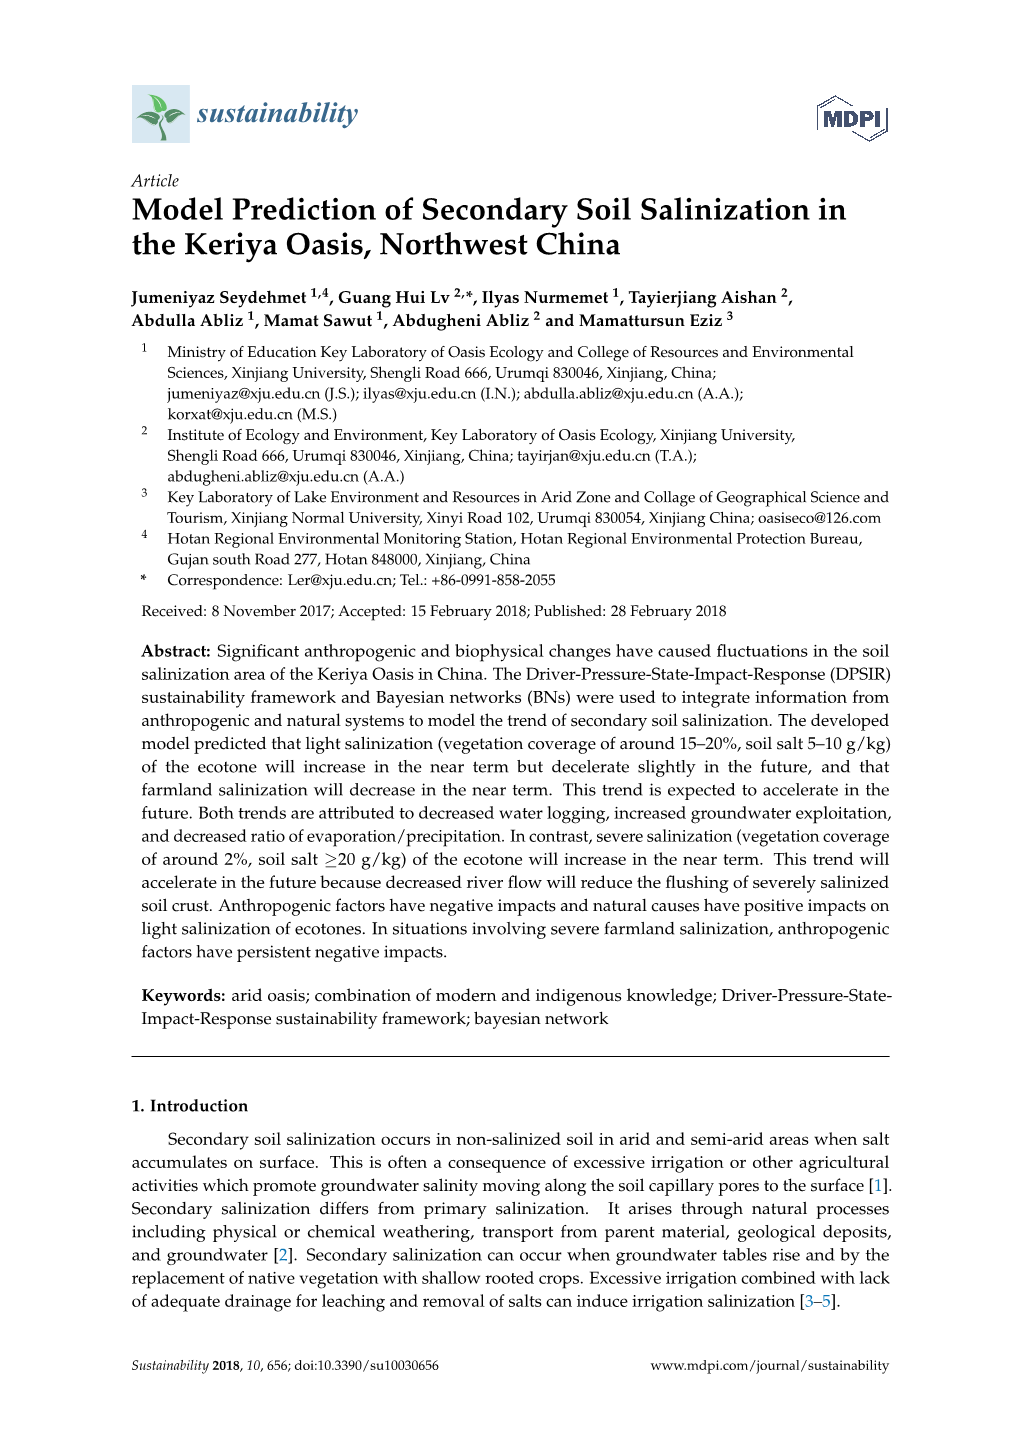 Model Prediction of Secondary Soil Salinization in the Keriya Oasis, Northwest China